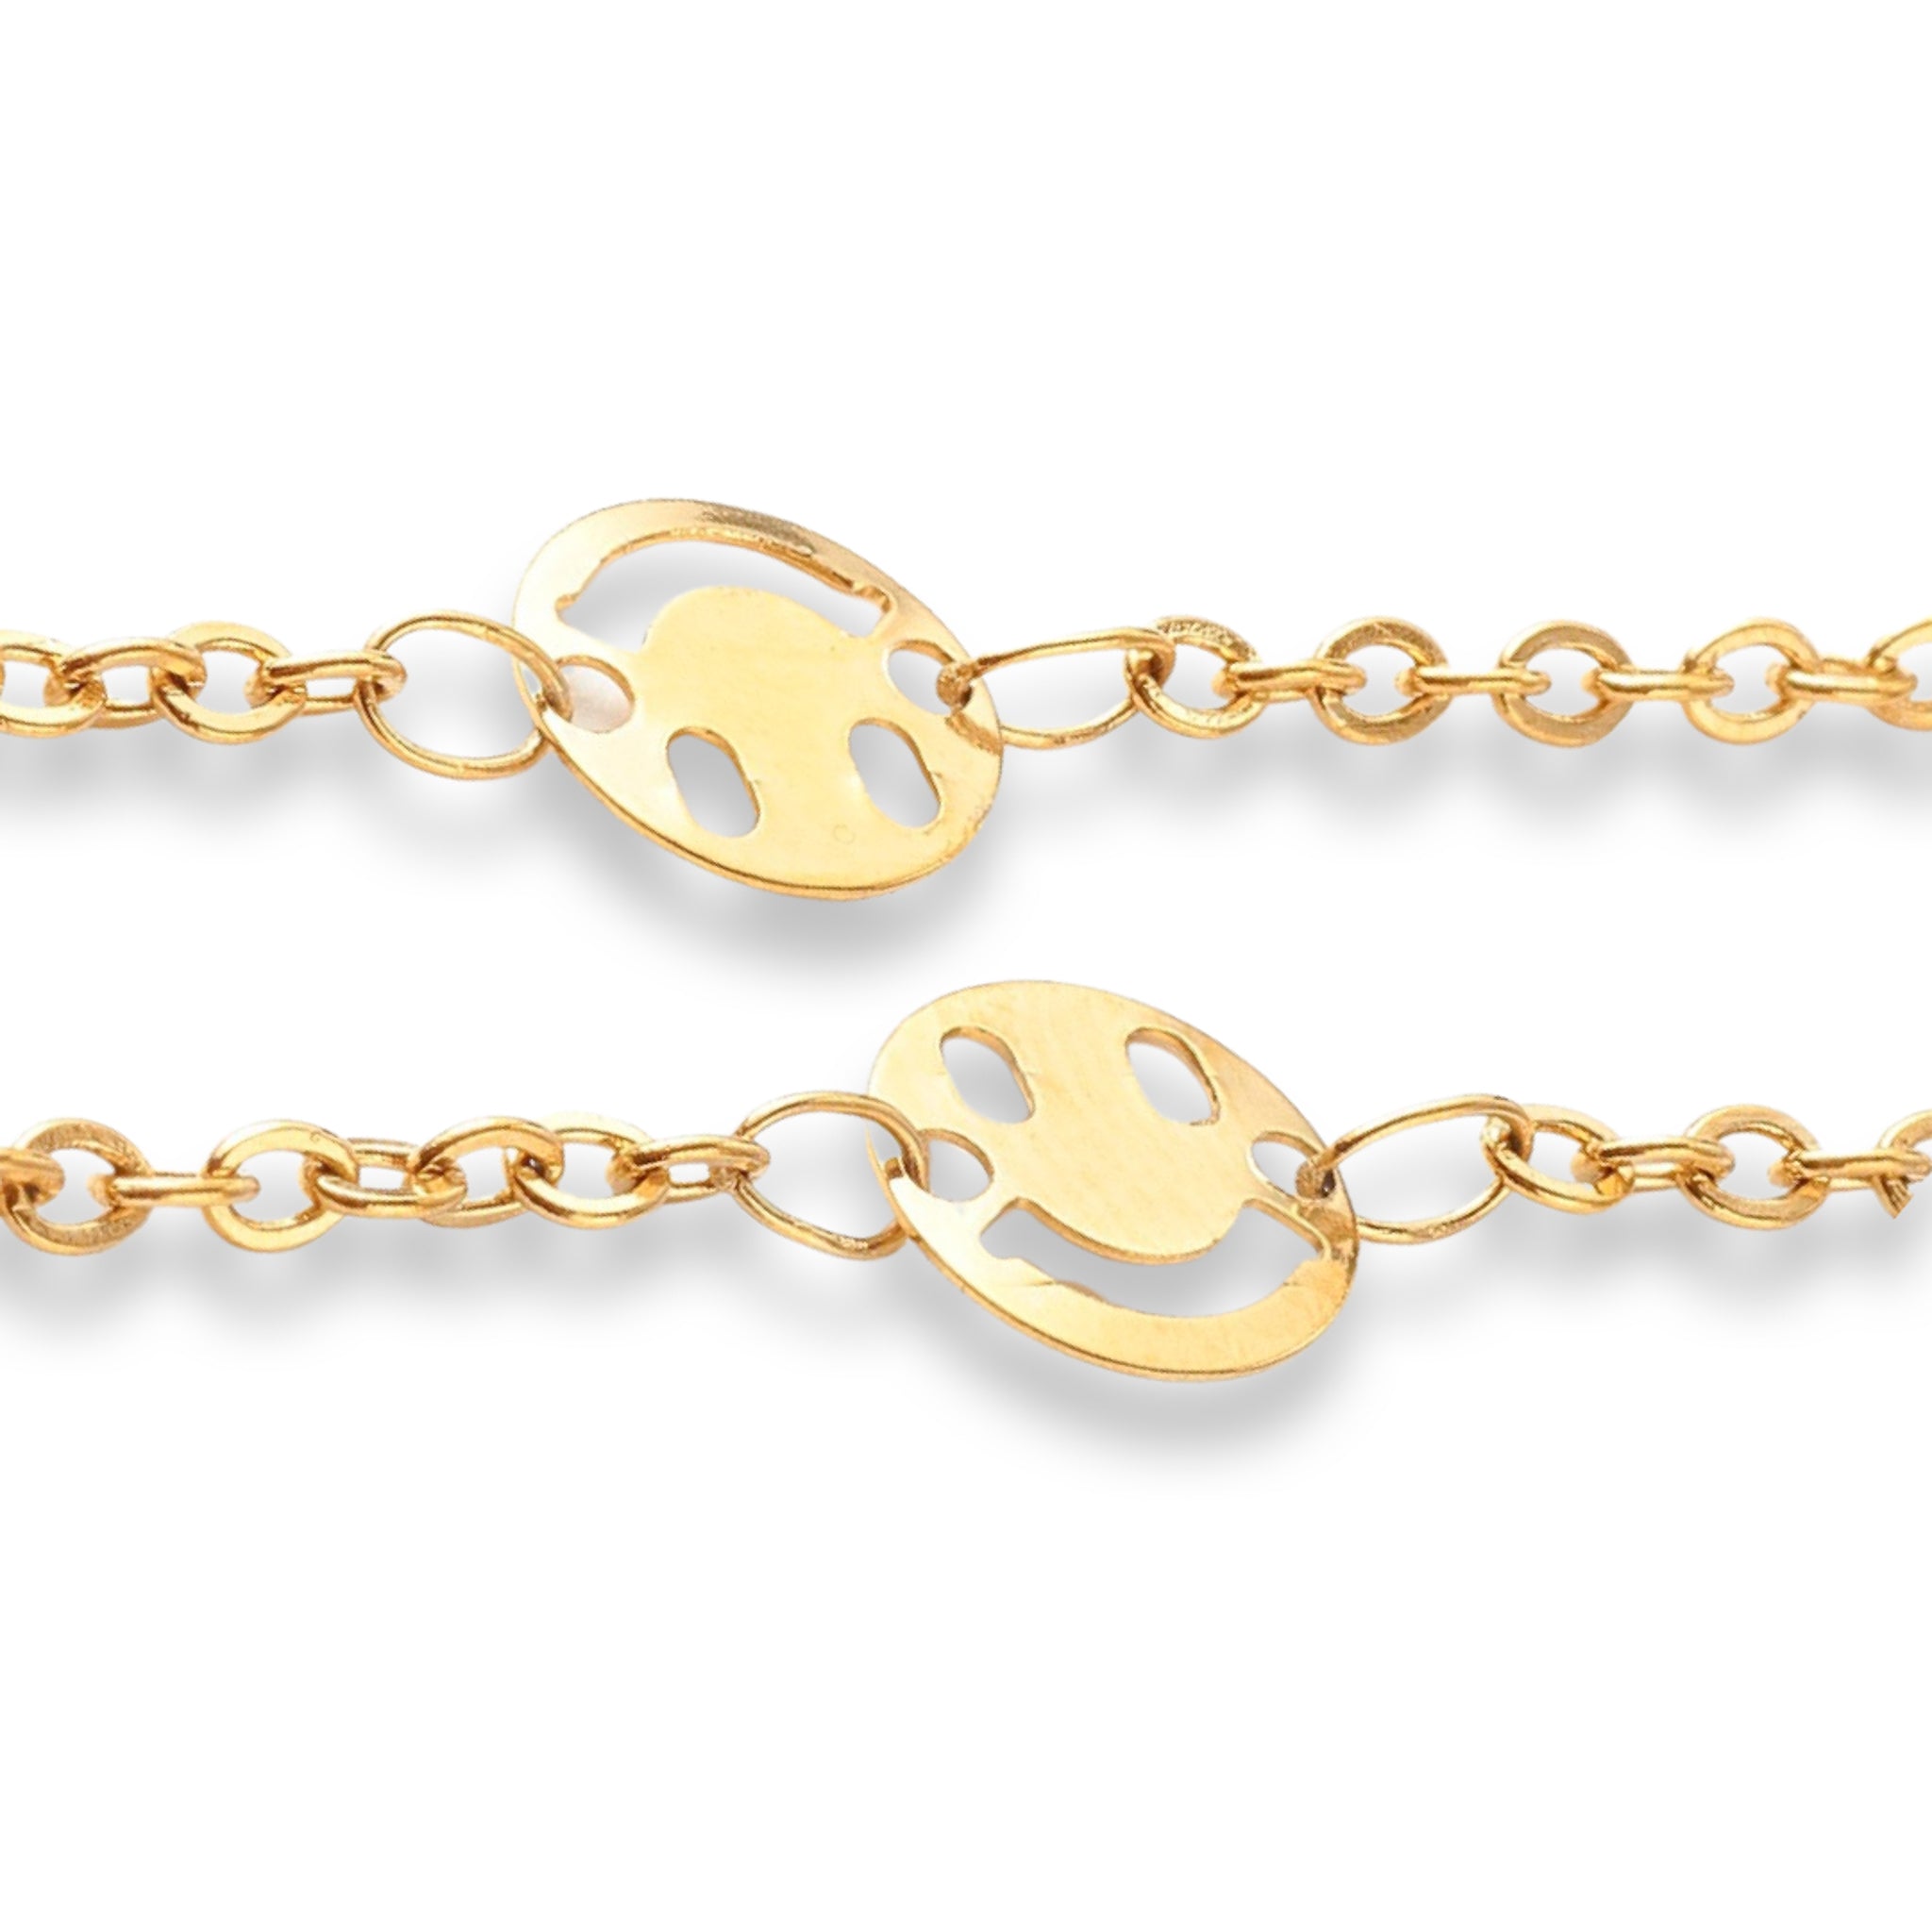 Smiley Face Chain Necklace - Epico Designs 